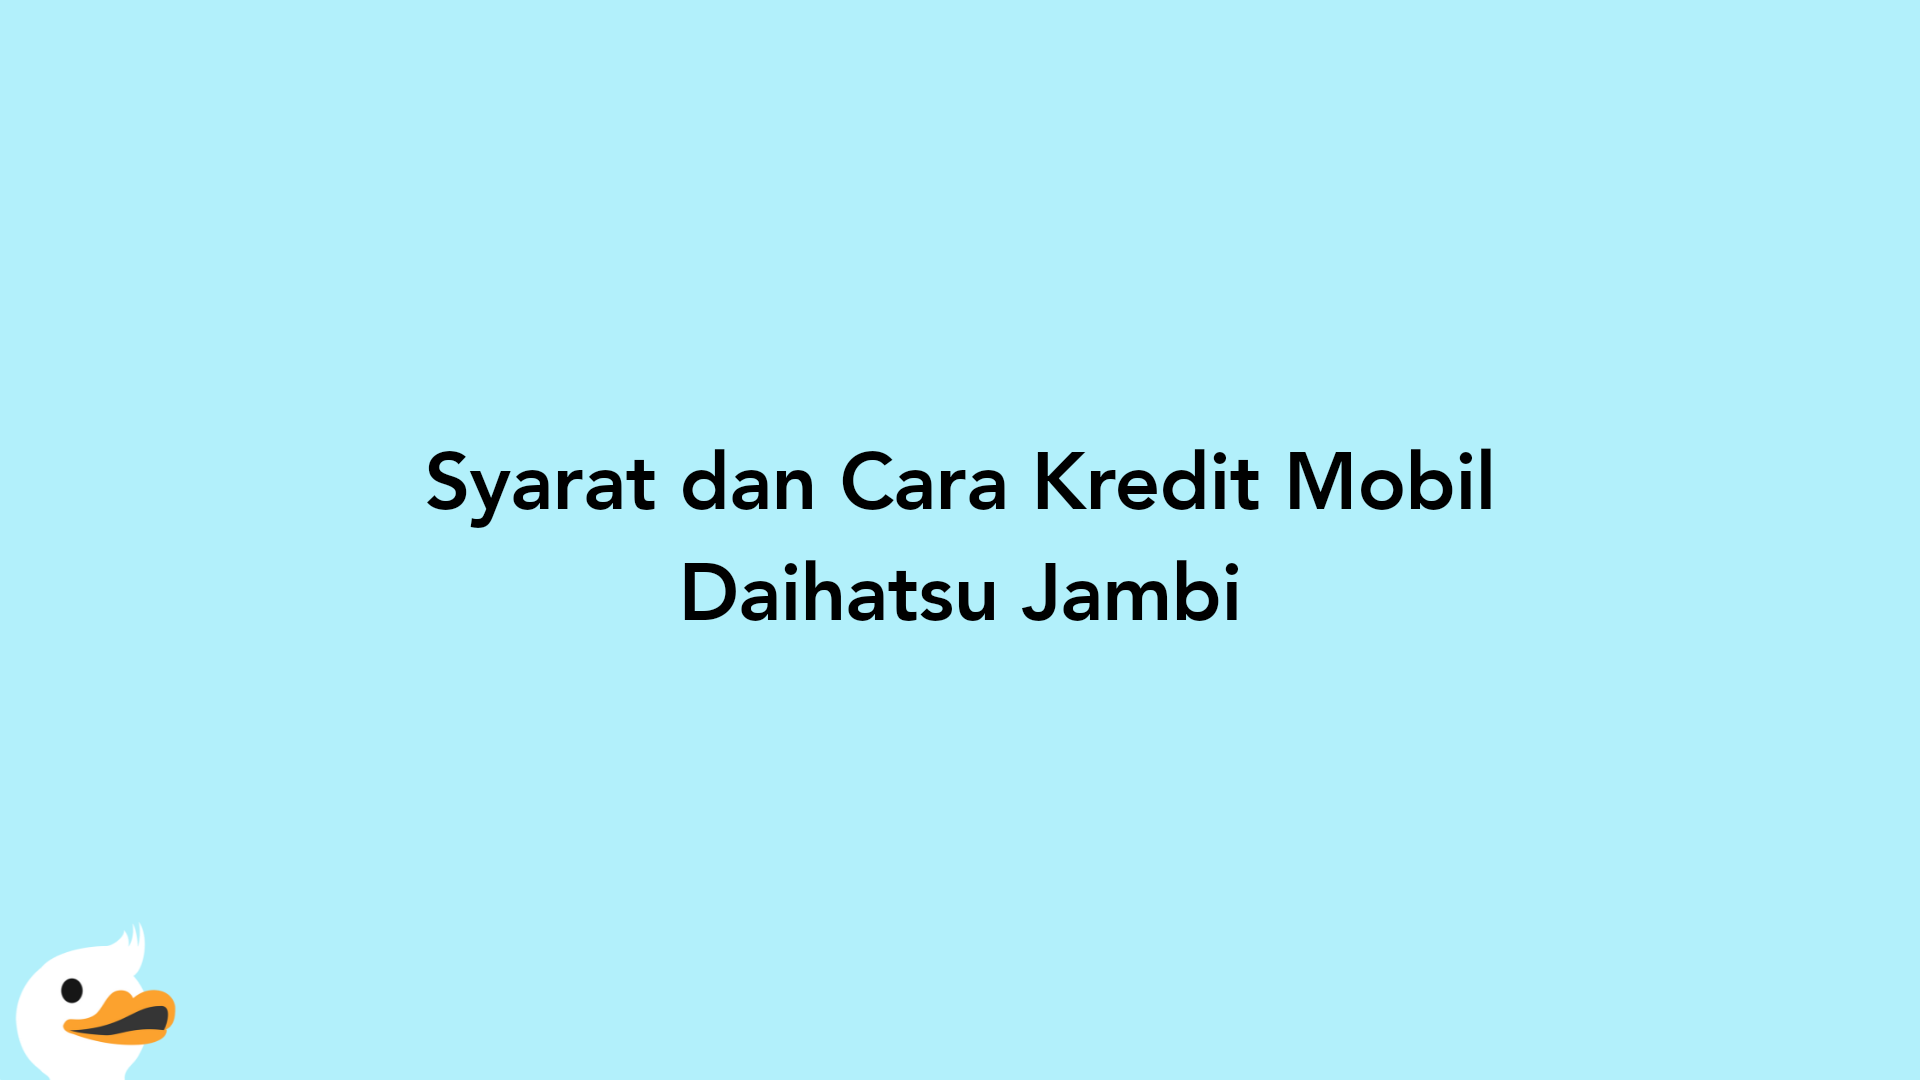 Syarat dan Cara Kredit Mobil Daihatsu Jambi